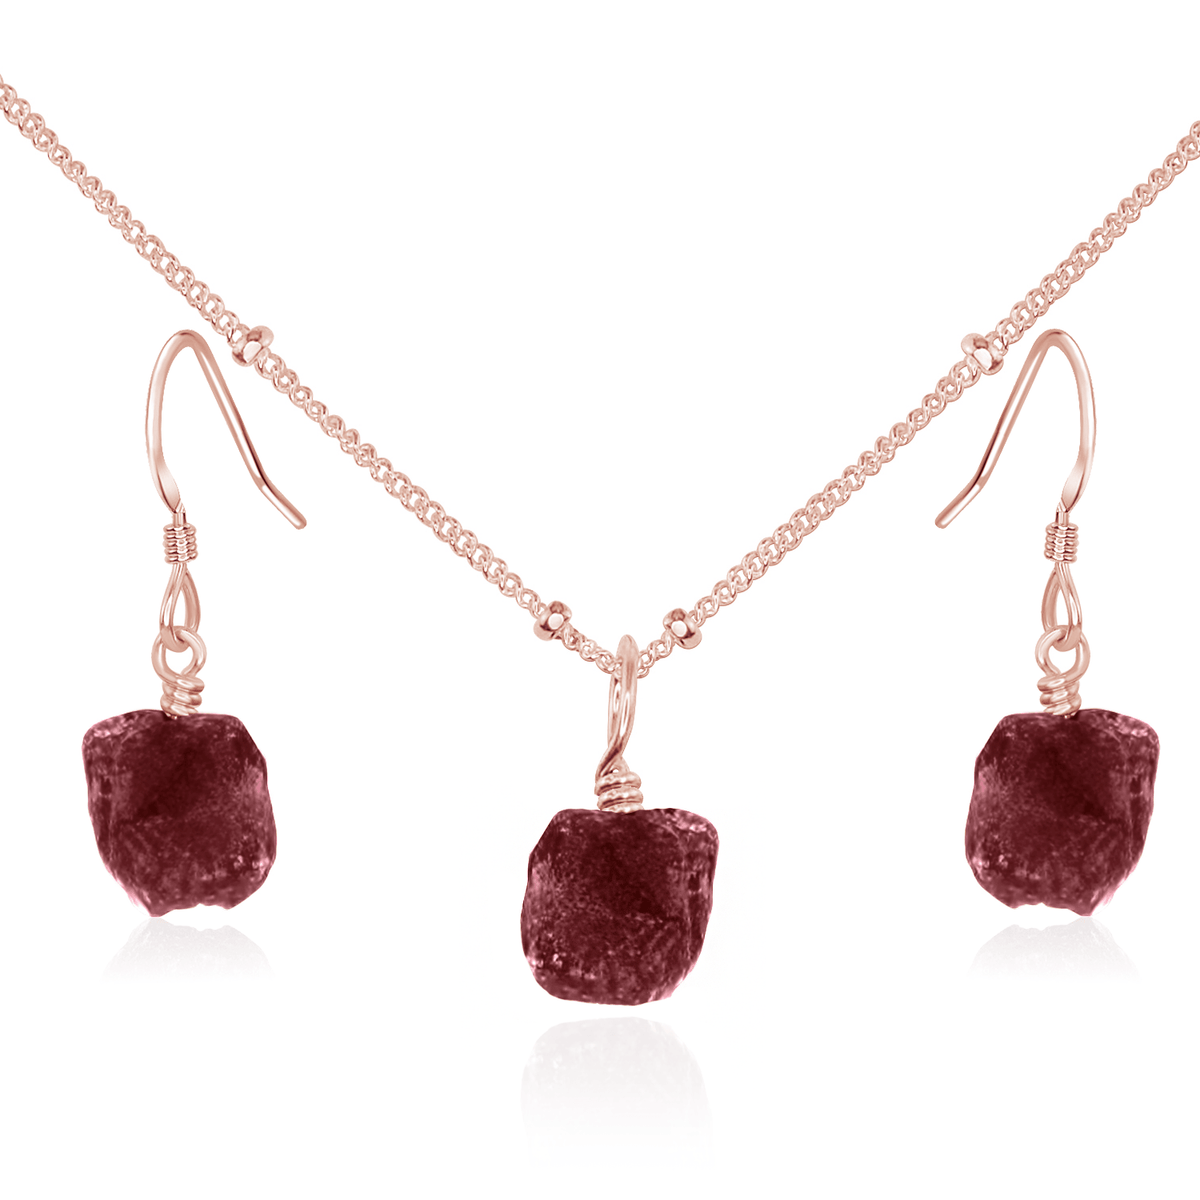 Raw Ruby Crystal Earrings & Necklace Set - Raw Ruby Crystal Earrings & Necklace Set - 14k Rose Gold Fill / Satellite - Luna Tide Handmade Crystal Jewellery